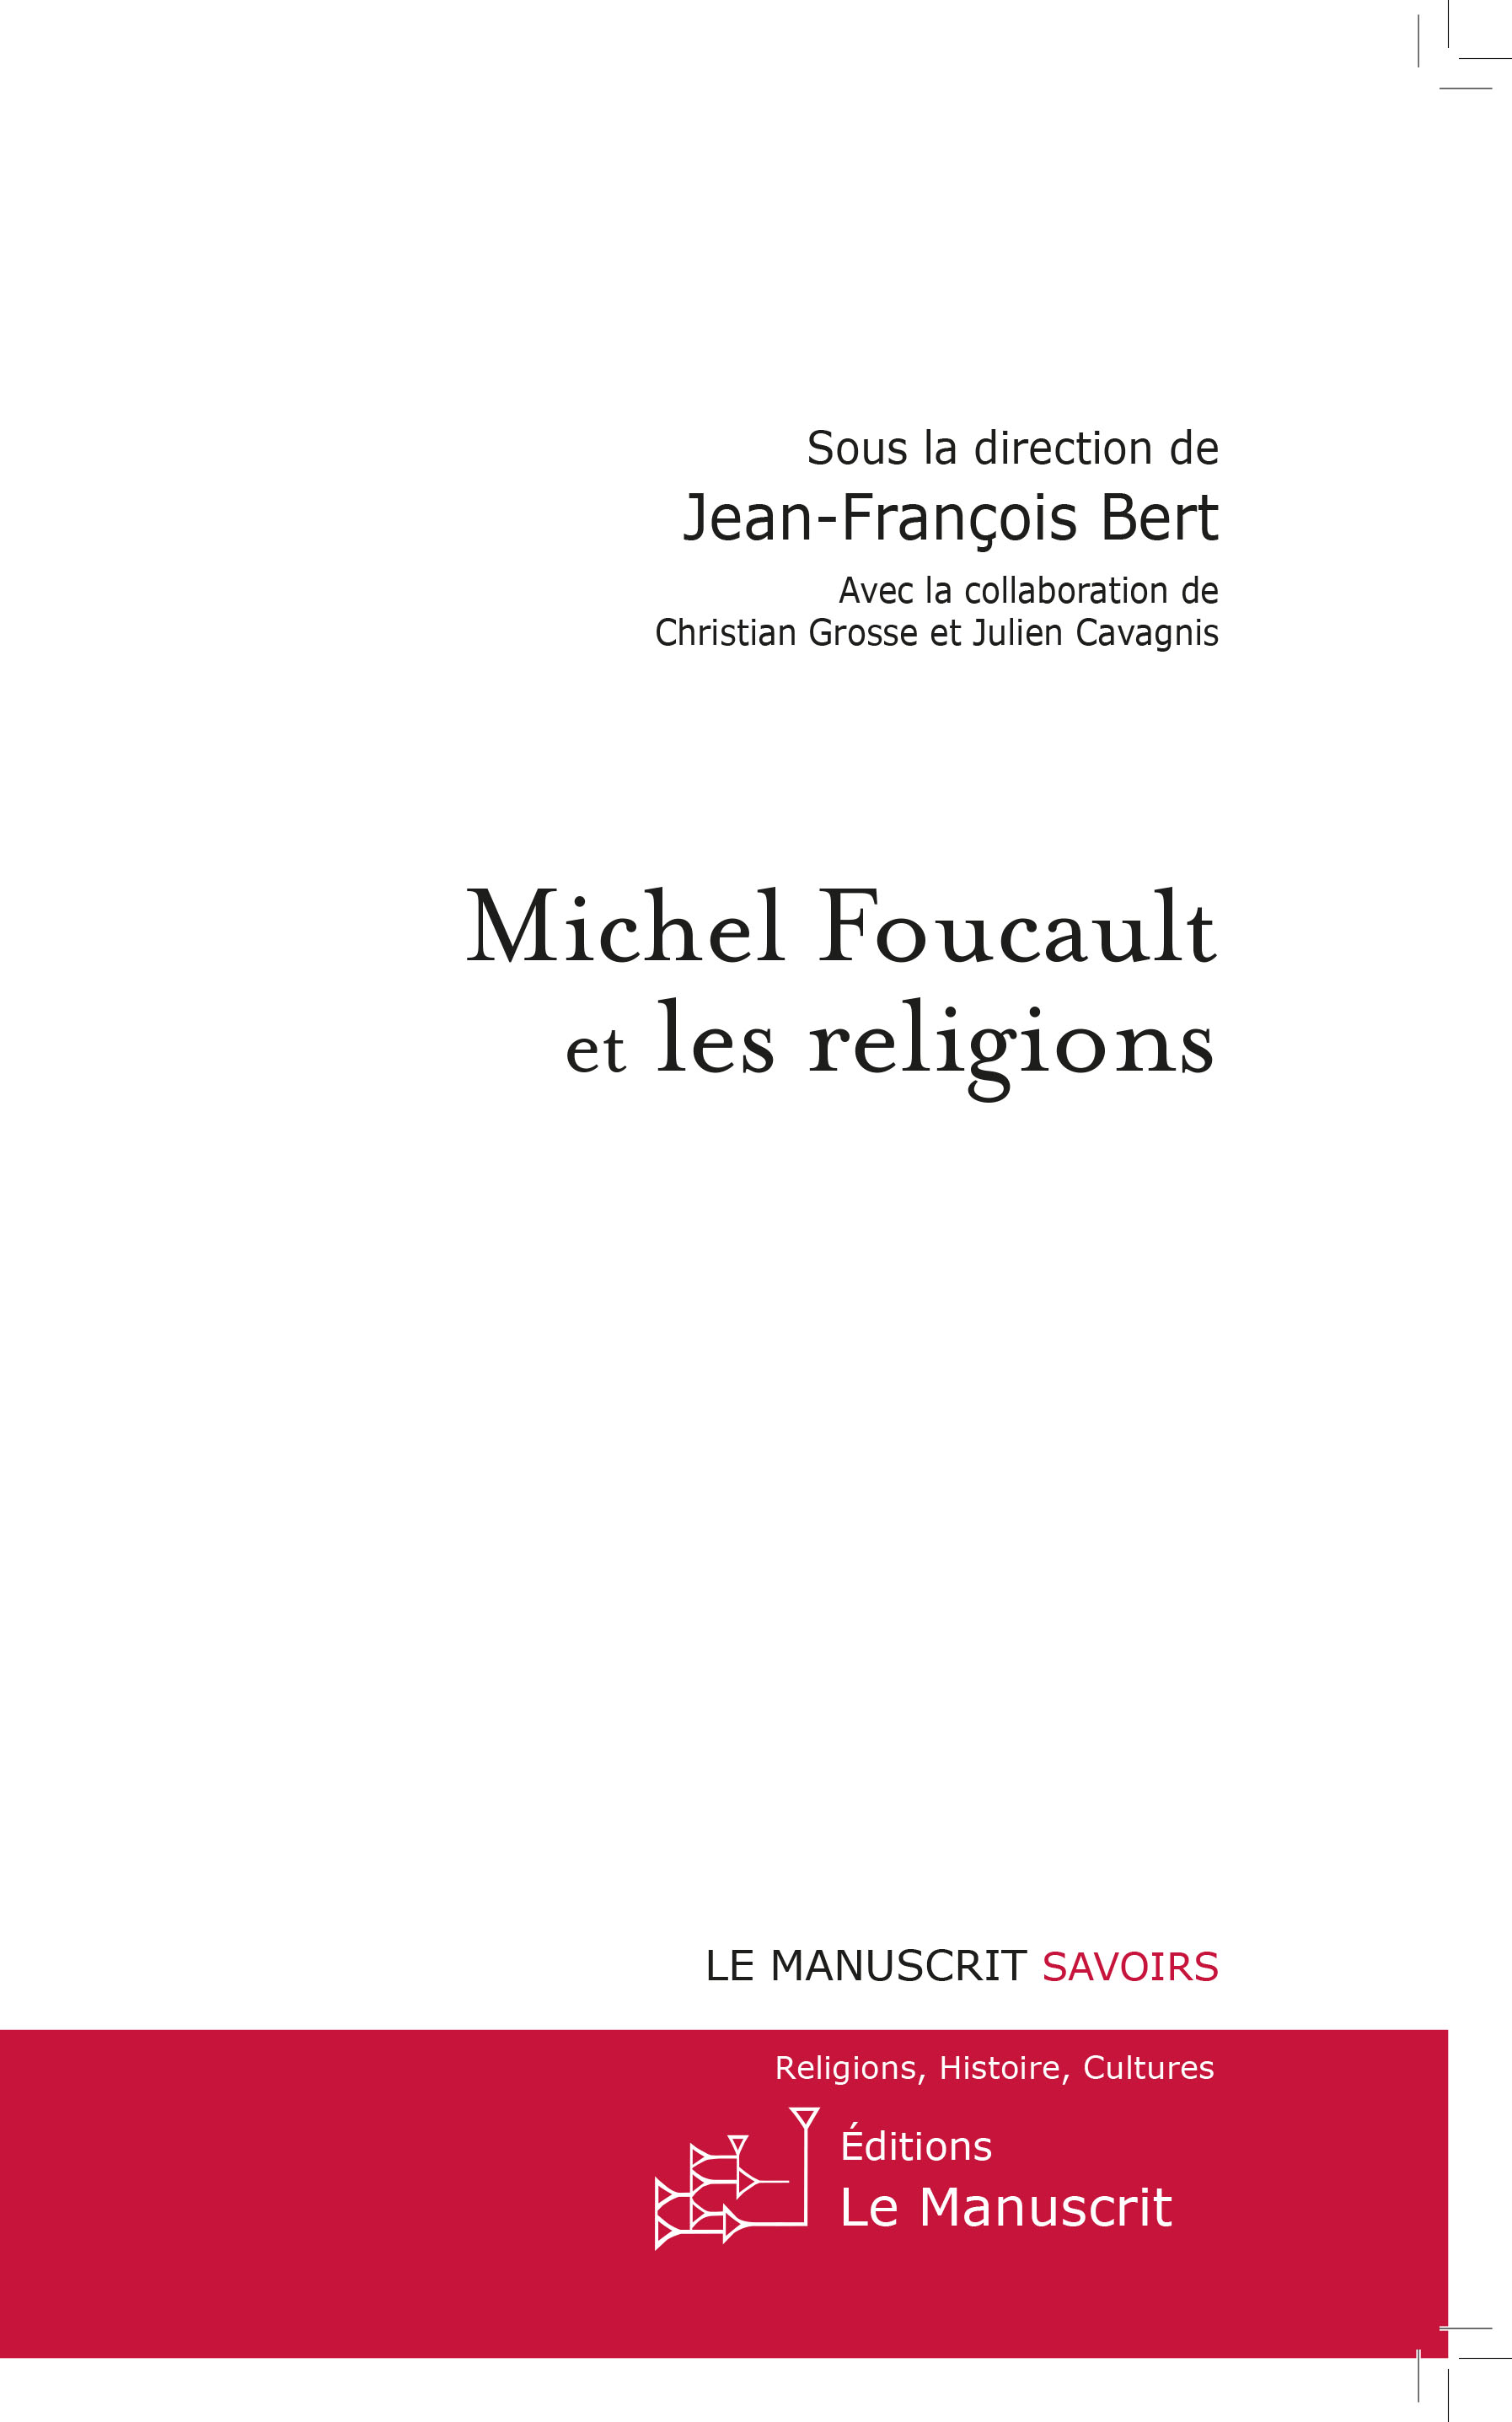 Foucault_Religions1.jpg